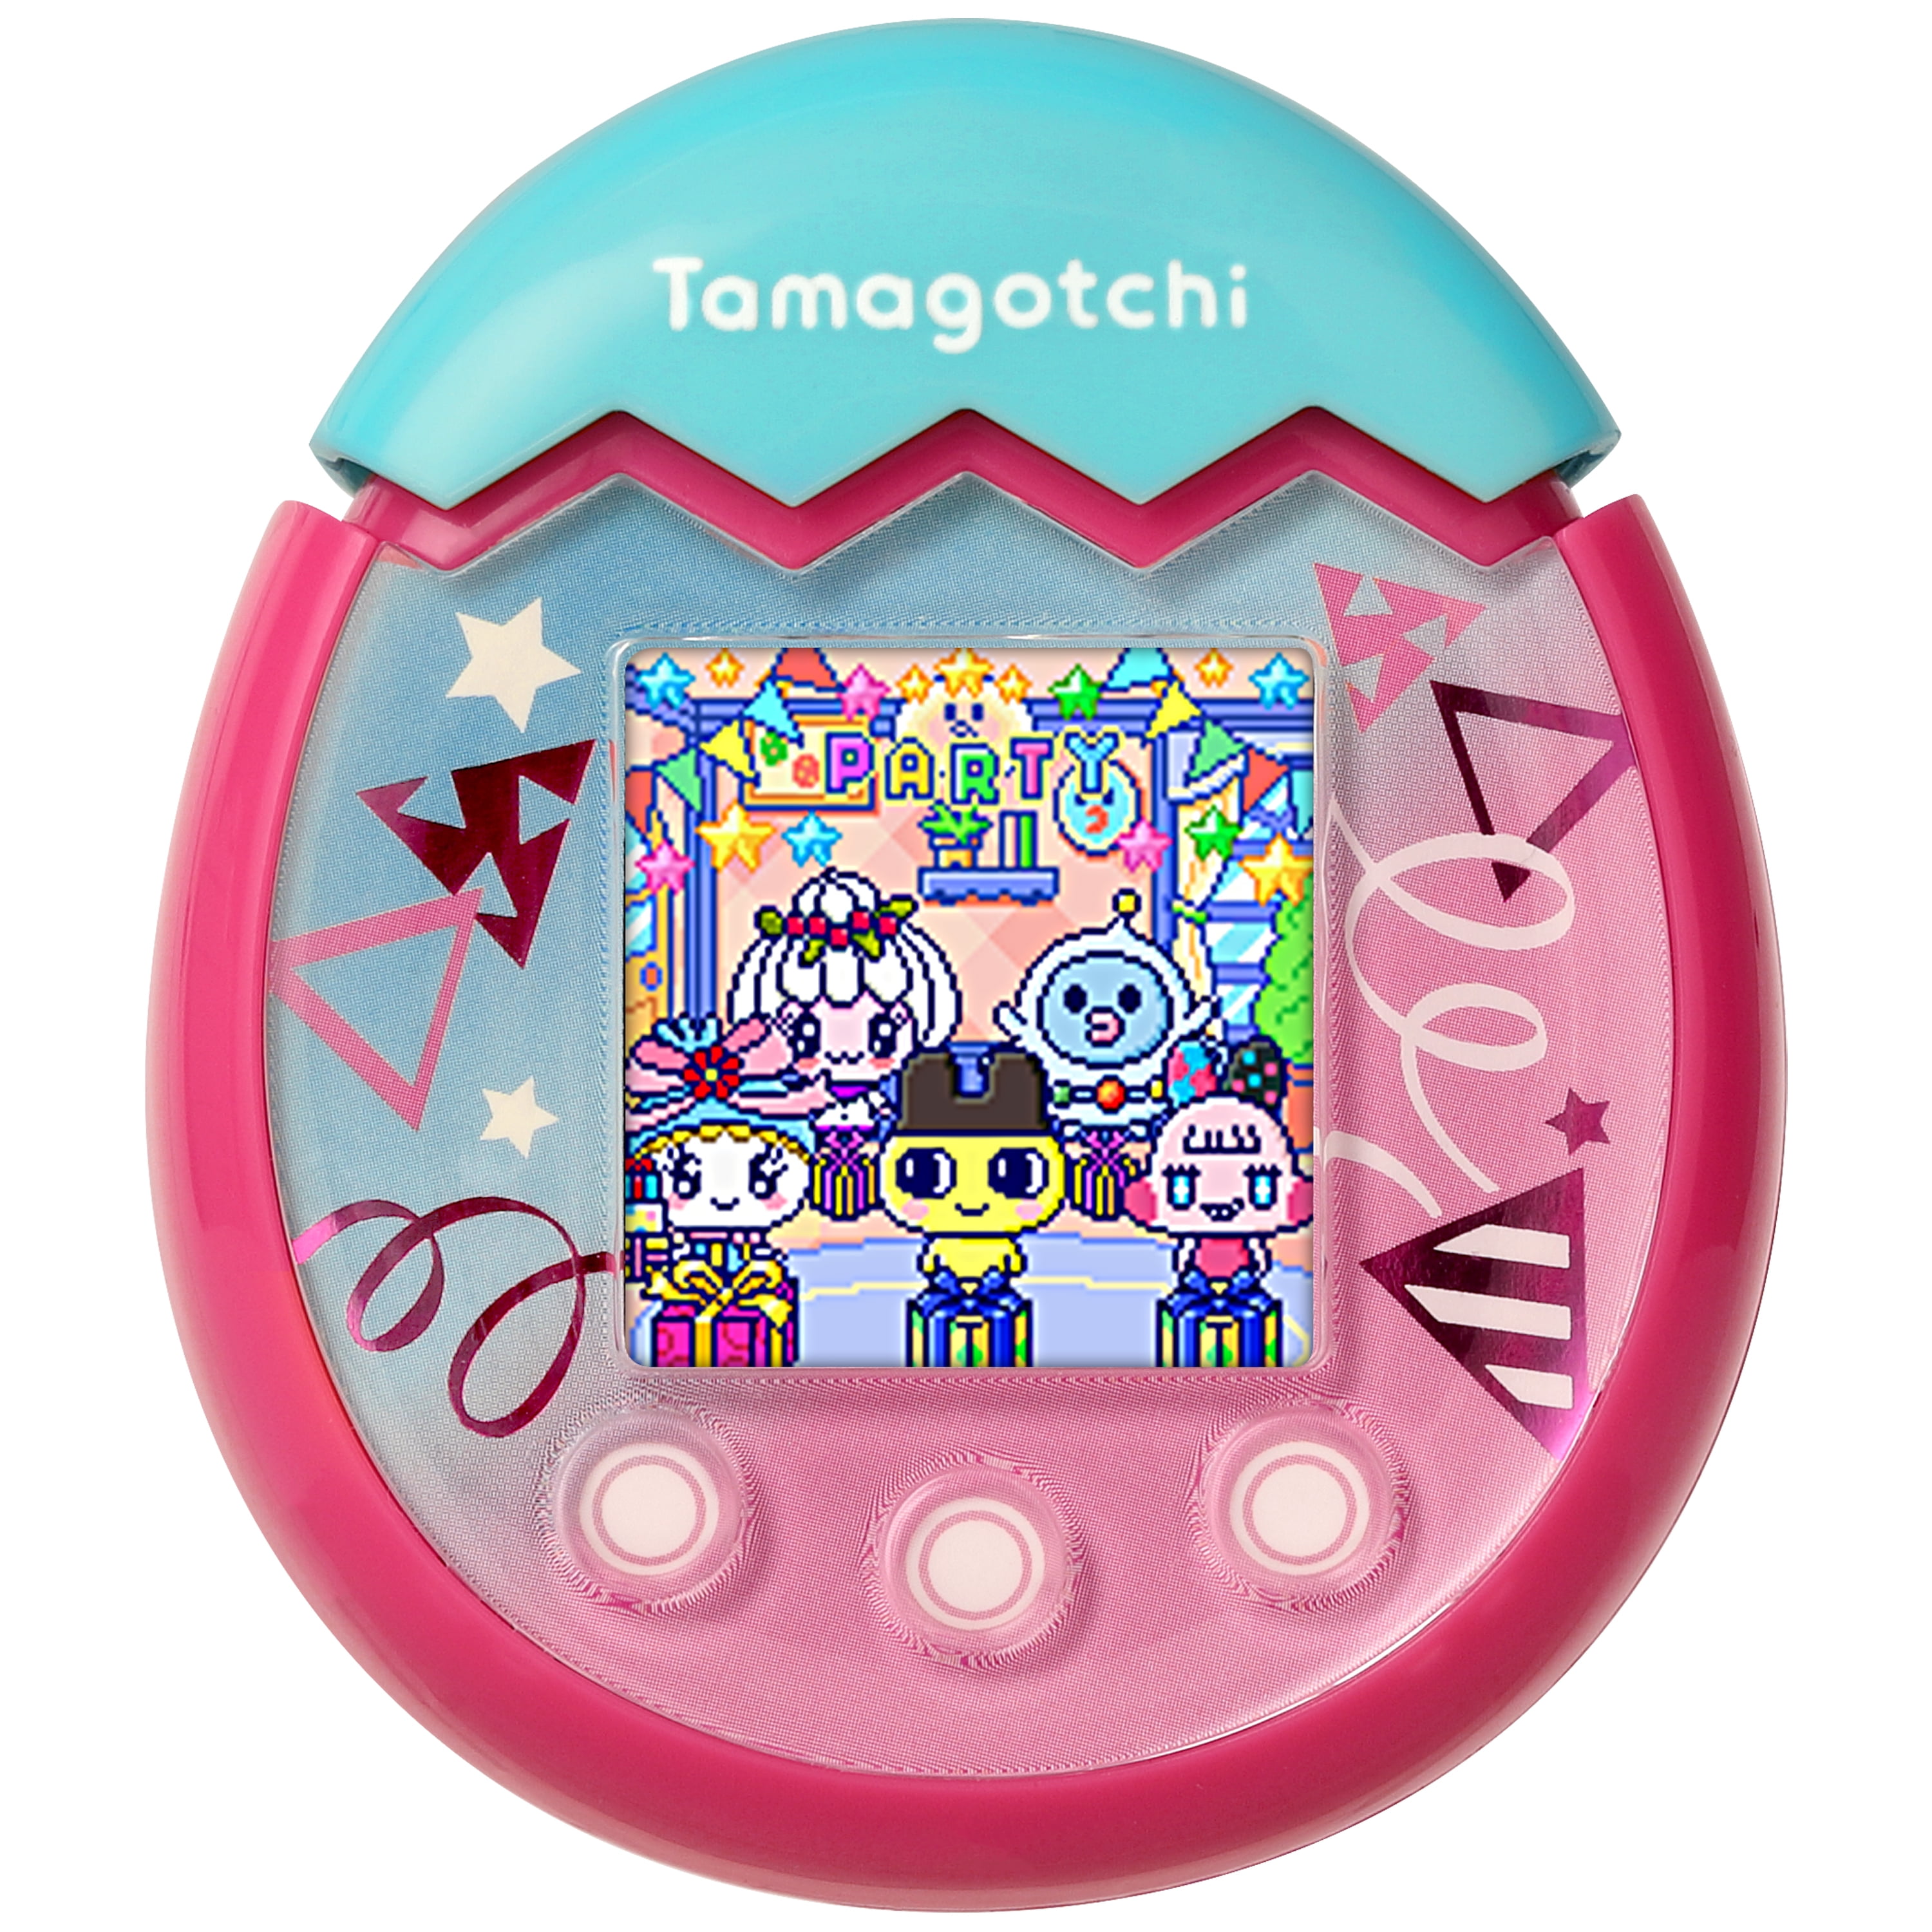 Tamagotchi Pix Party Confetti Electronic Pet 